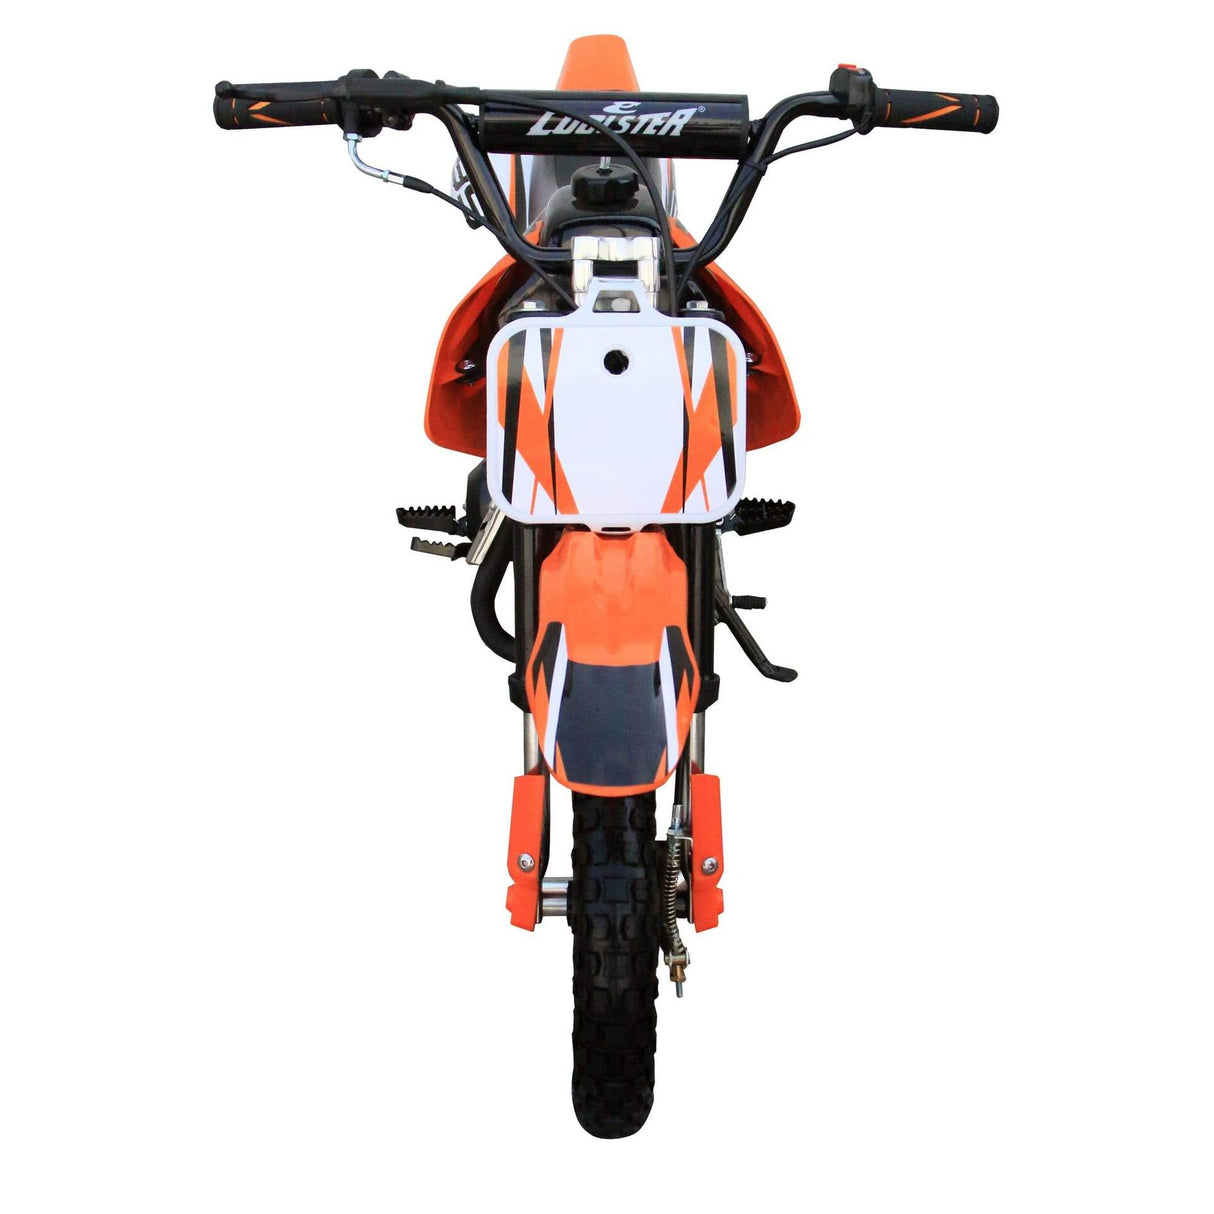 Coolster X2 70cc Kids Dirt Bike - TribalMotorsports